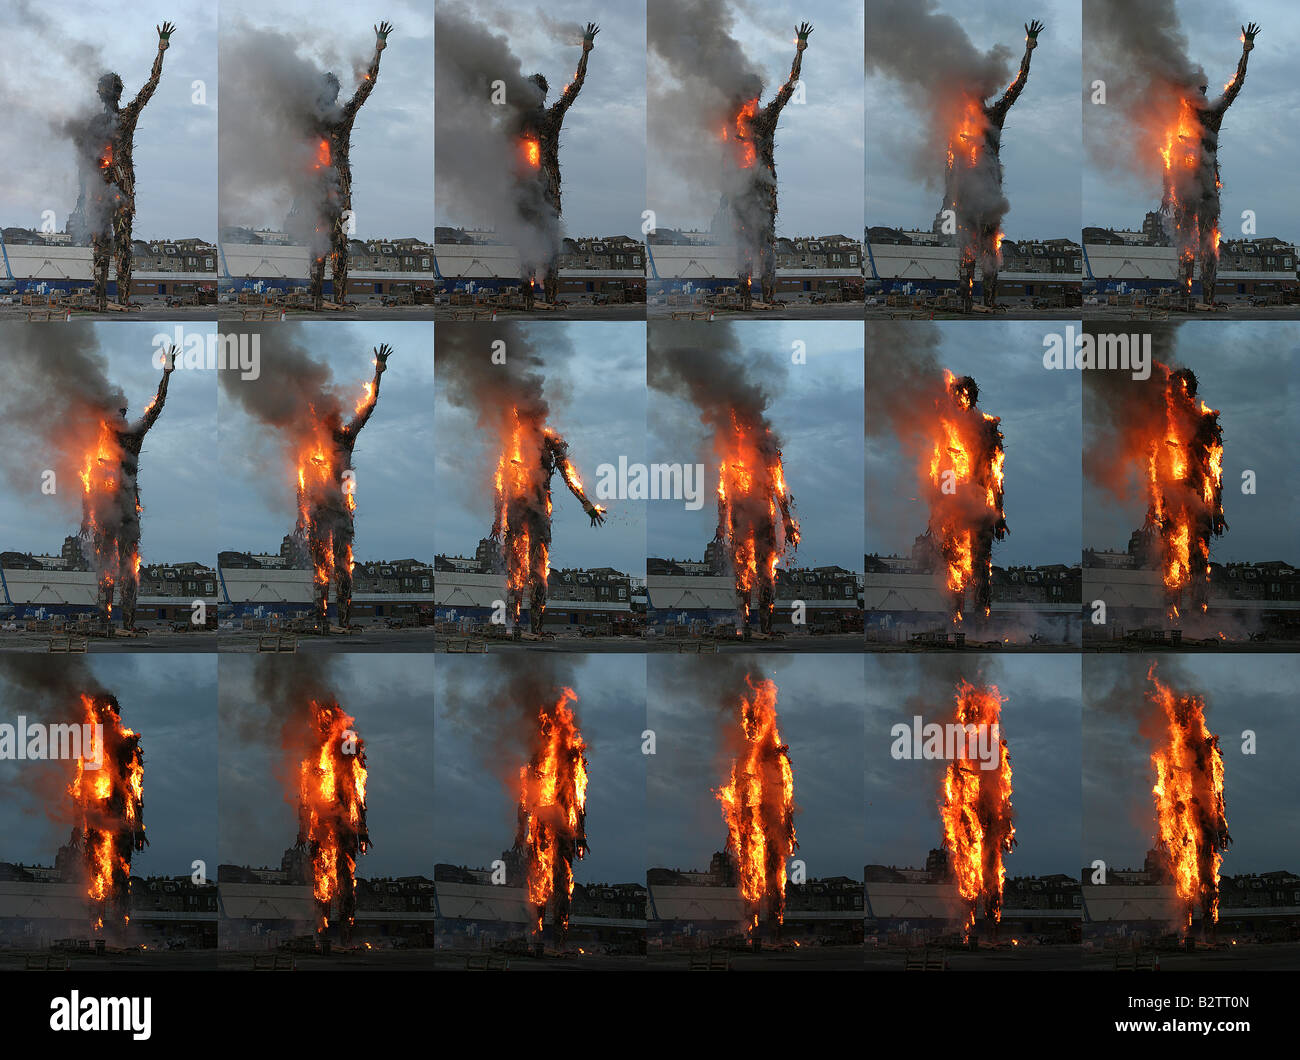 Burning sequence of Anthony Gormley's Waste Man from Margate Exodus film set. Composite image Stock Photo